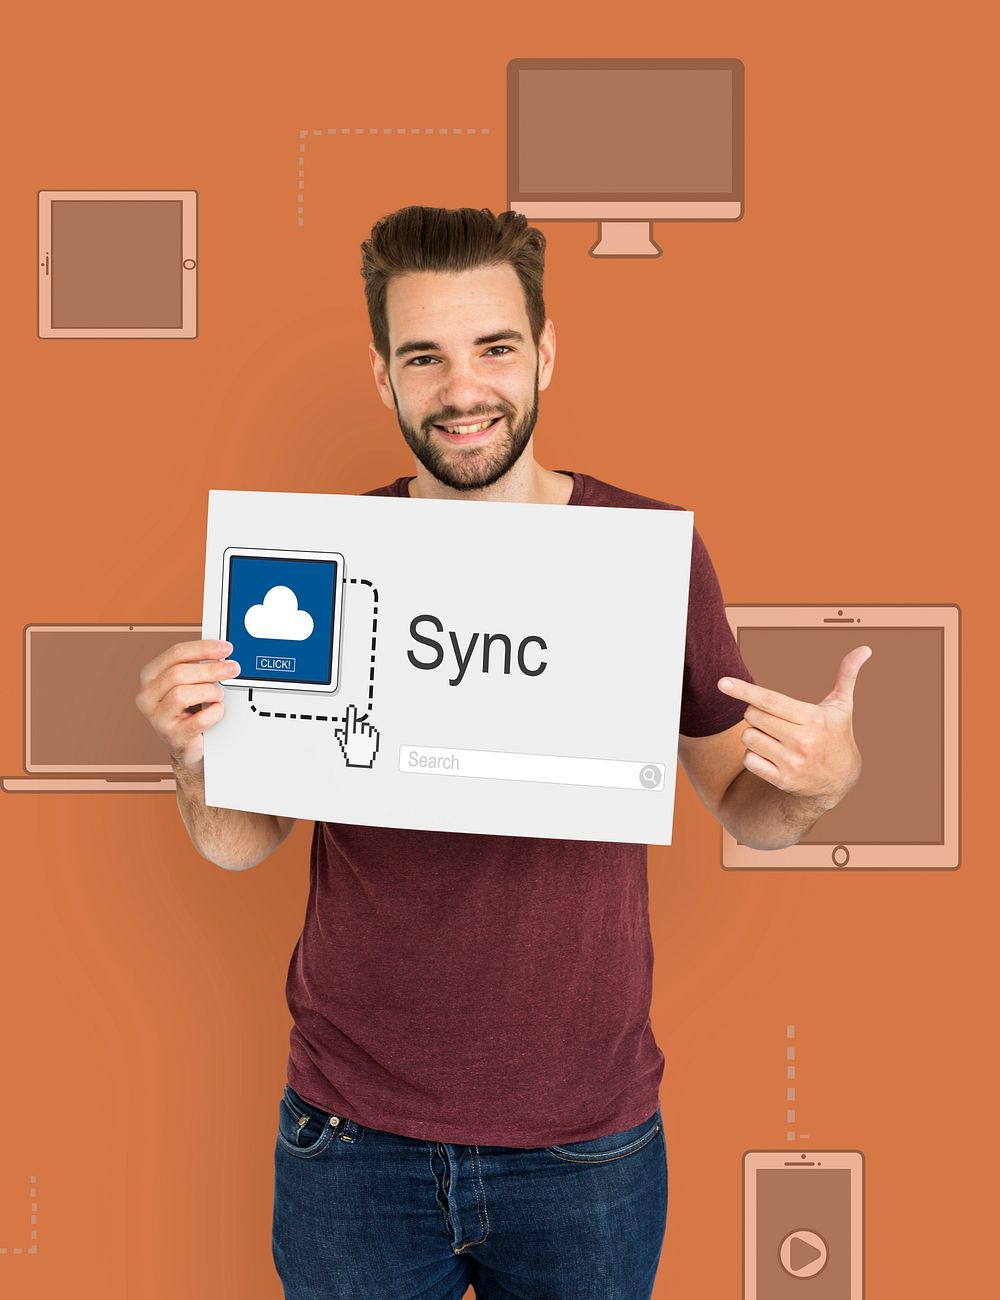 Download Network Sync Cloud Storage Community